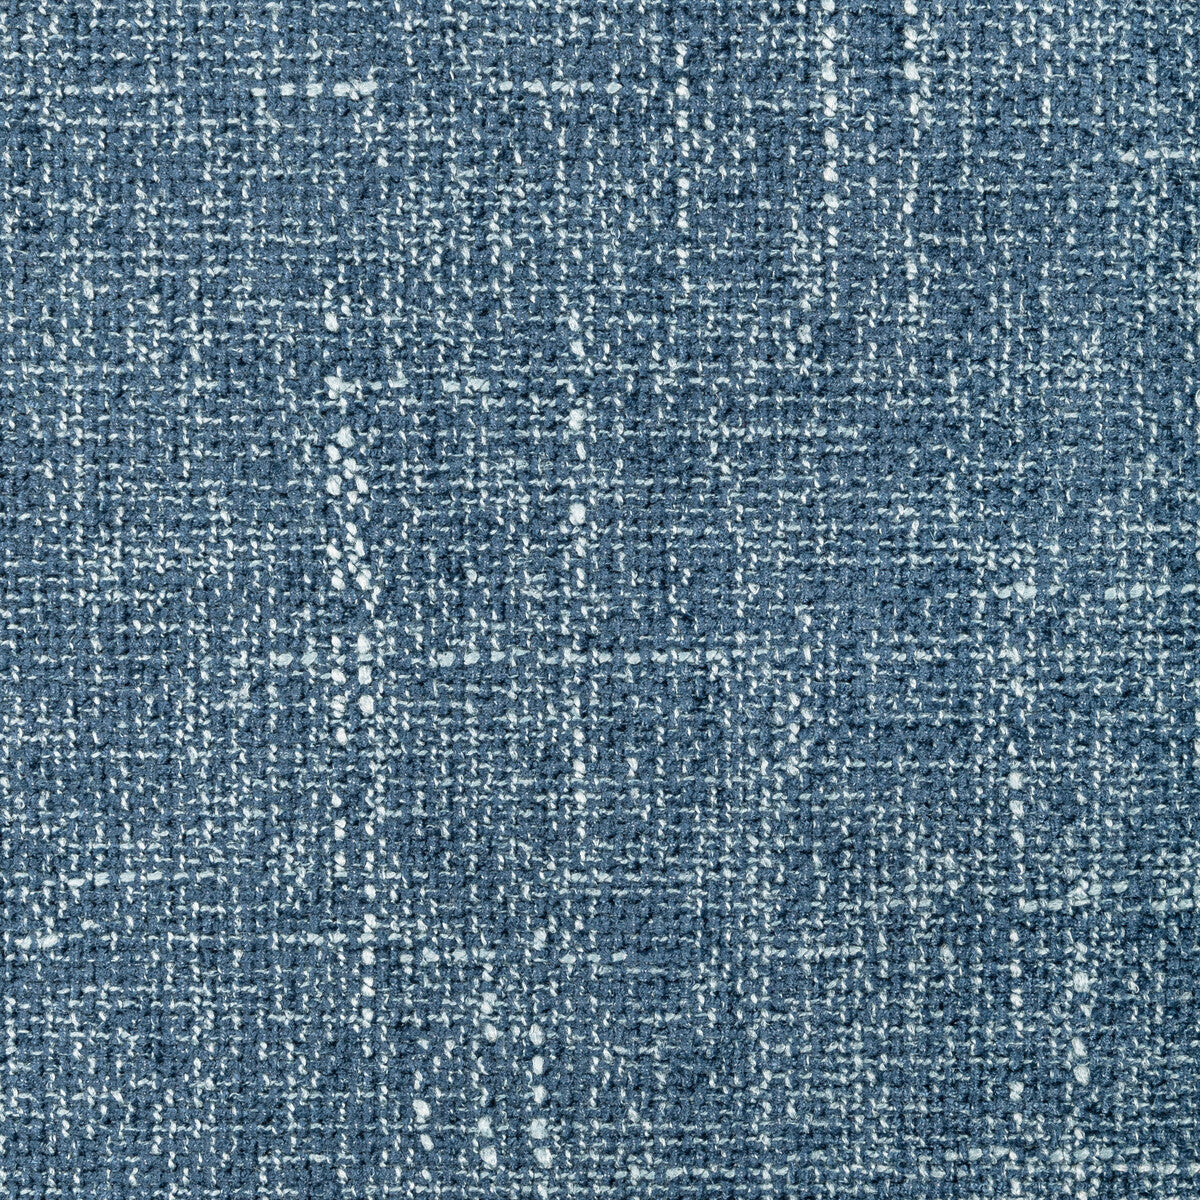 Kravet Smart fabric in 36579-55 color - pattern 36579.55.0 - by Kravet Smart in the Performance Kravetarmor collection